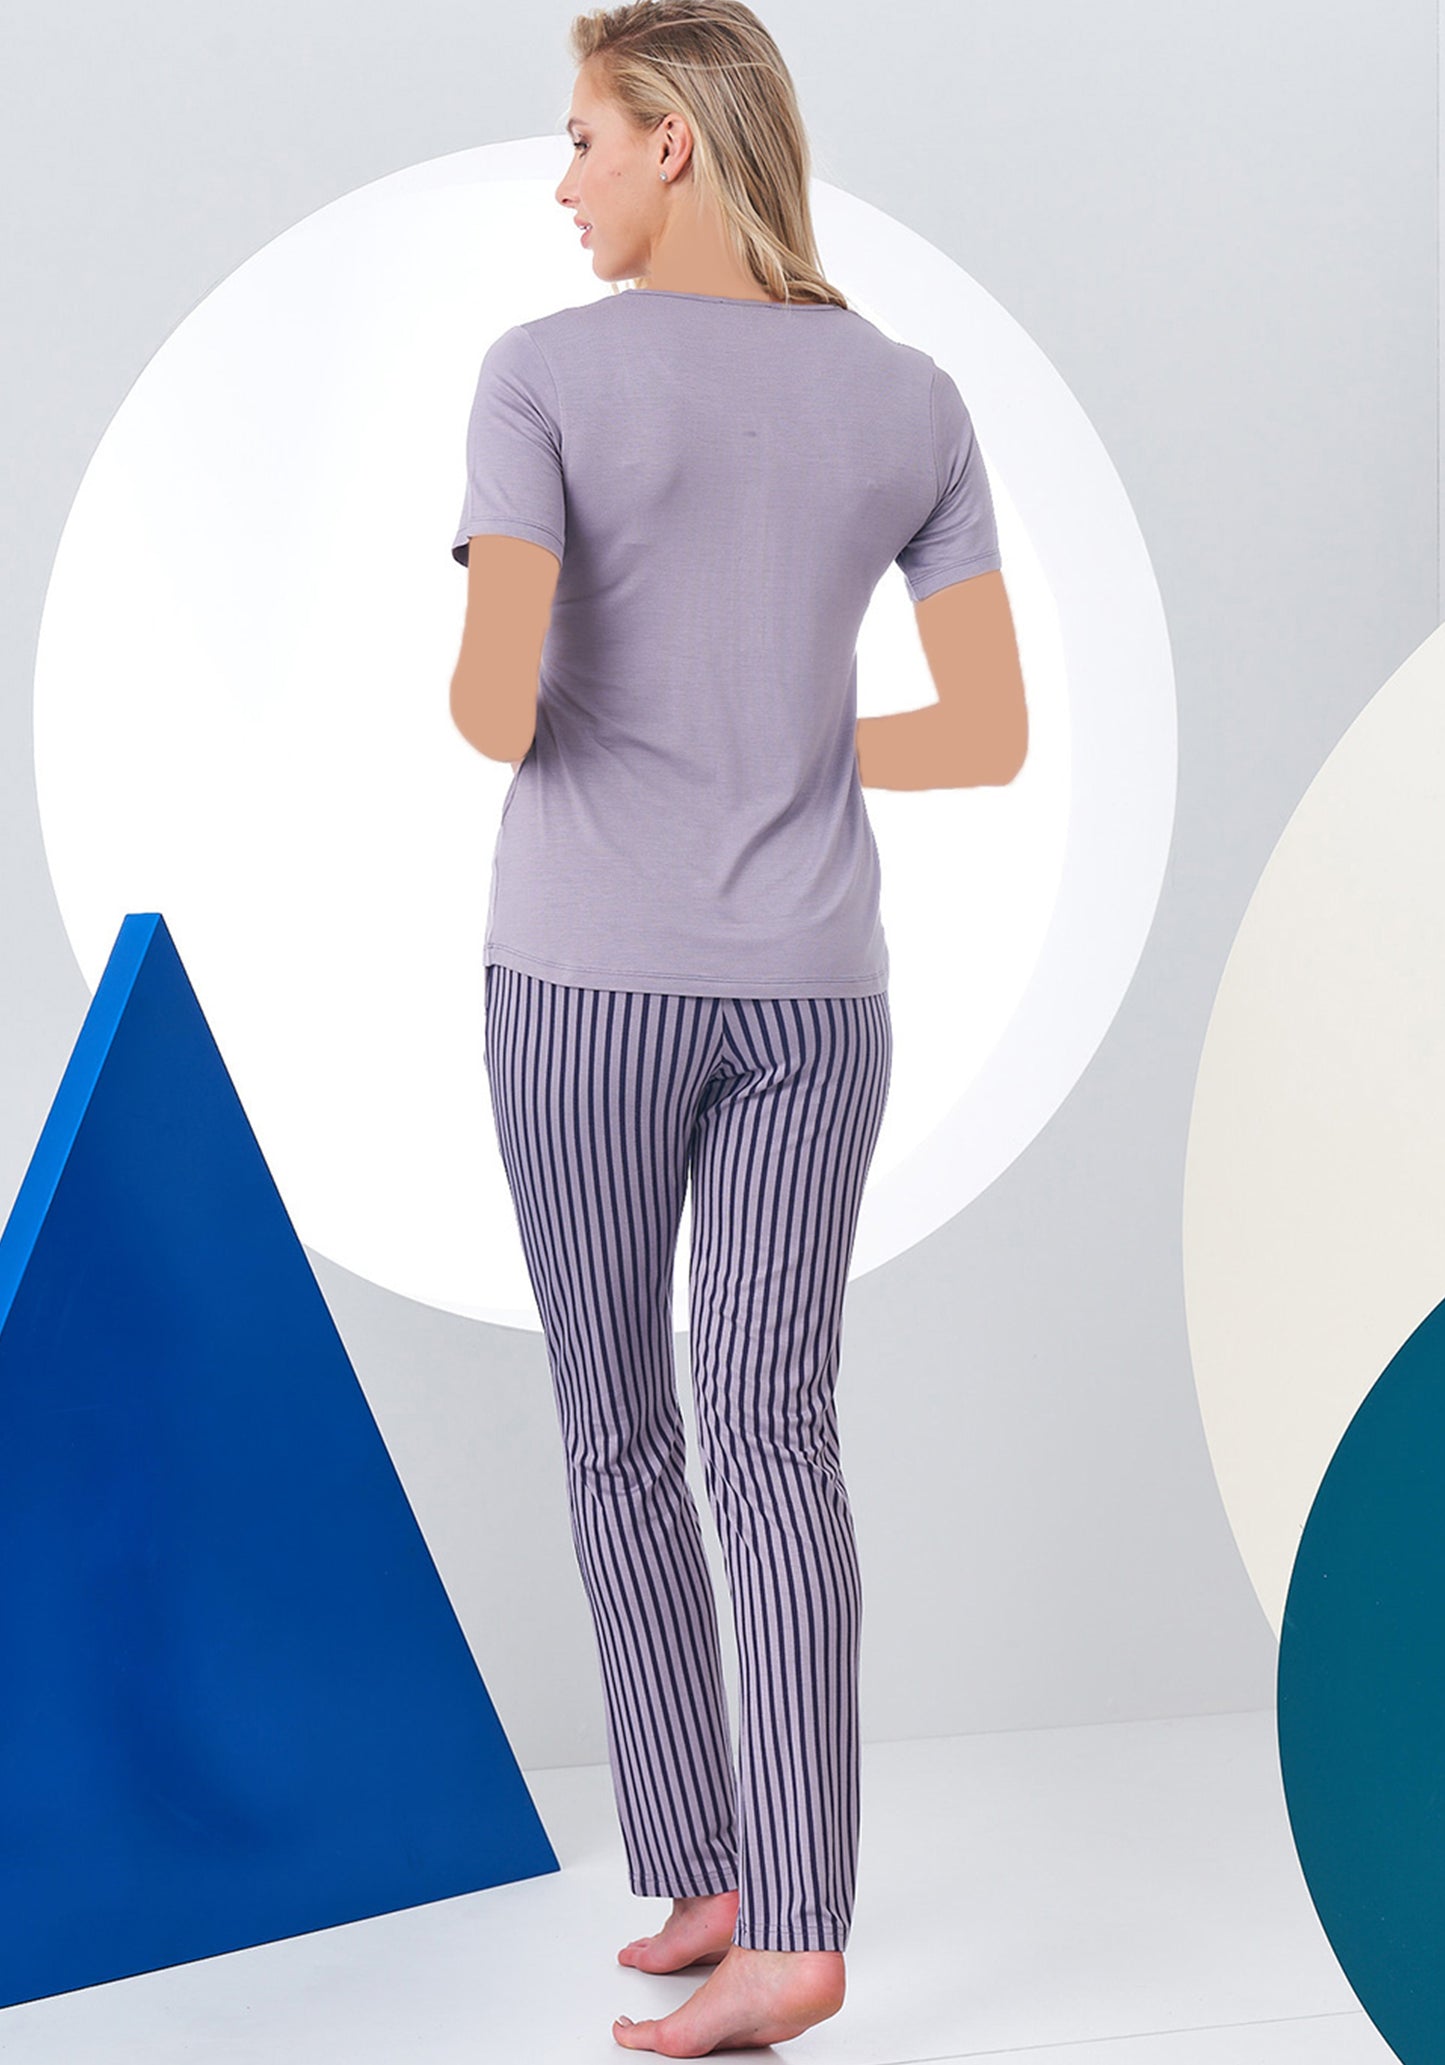 S&L Short Sleeve Striped Pajama